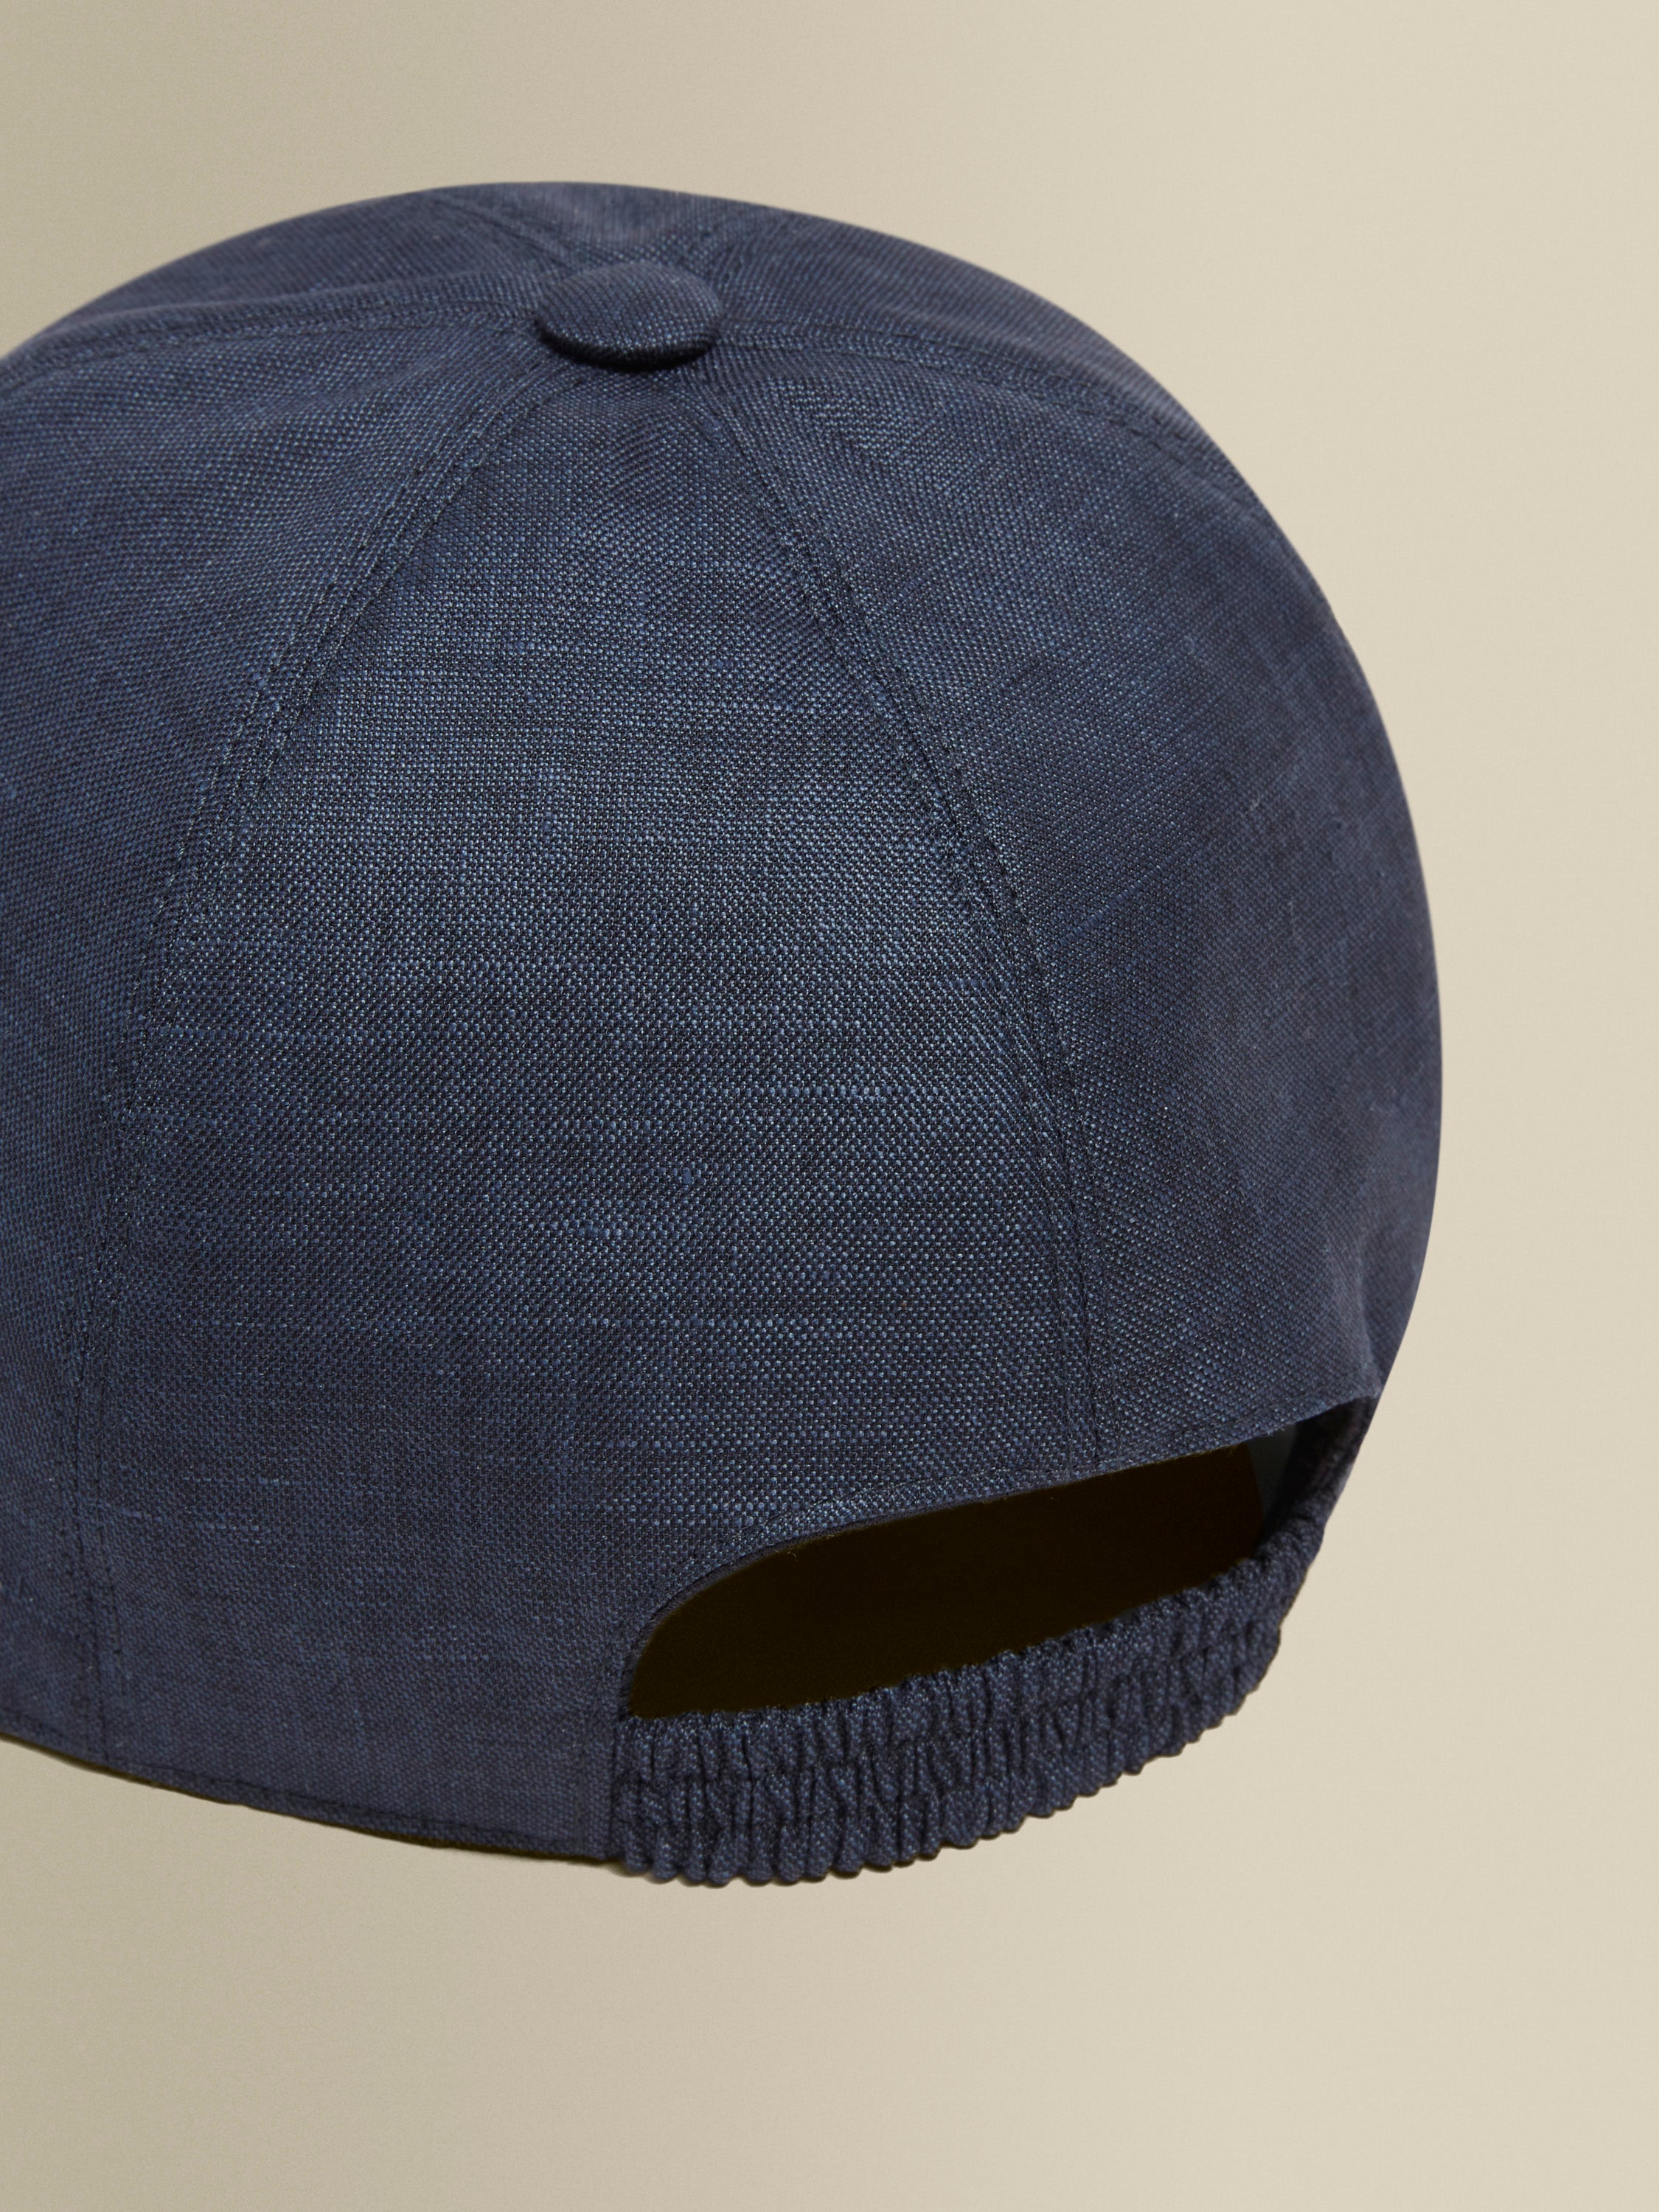 Linen Wool Baseball Cap Navy Detail Product Image